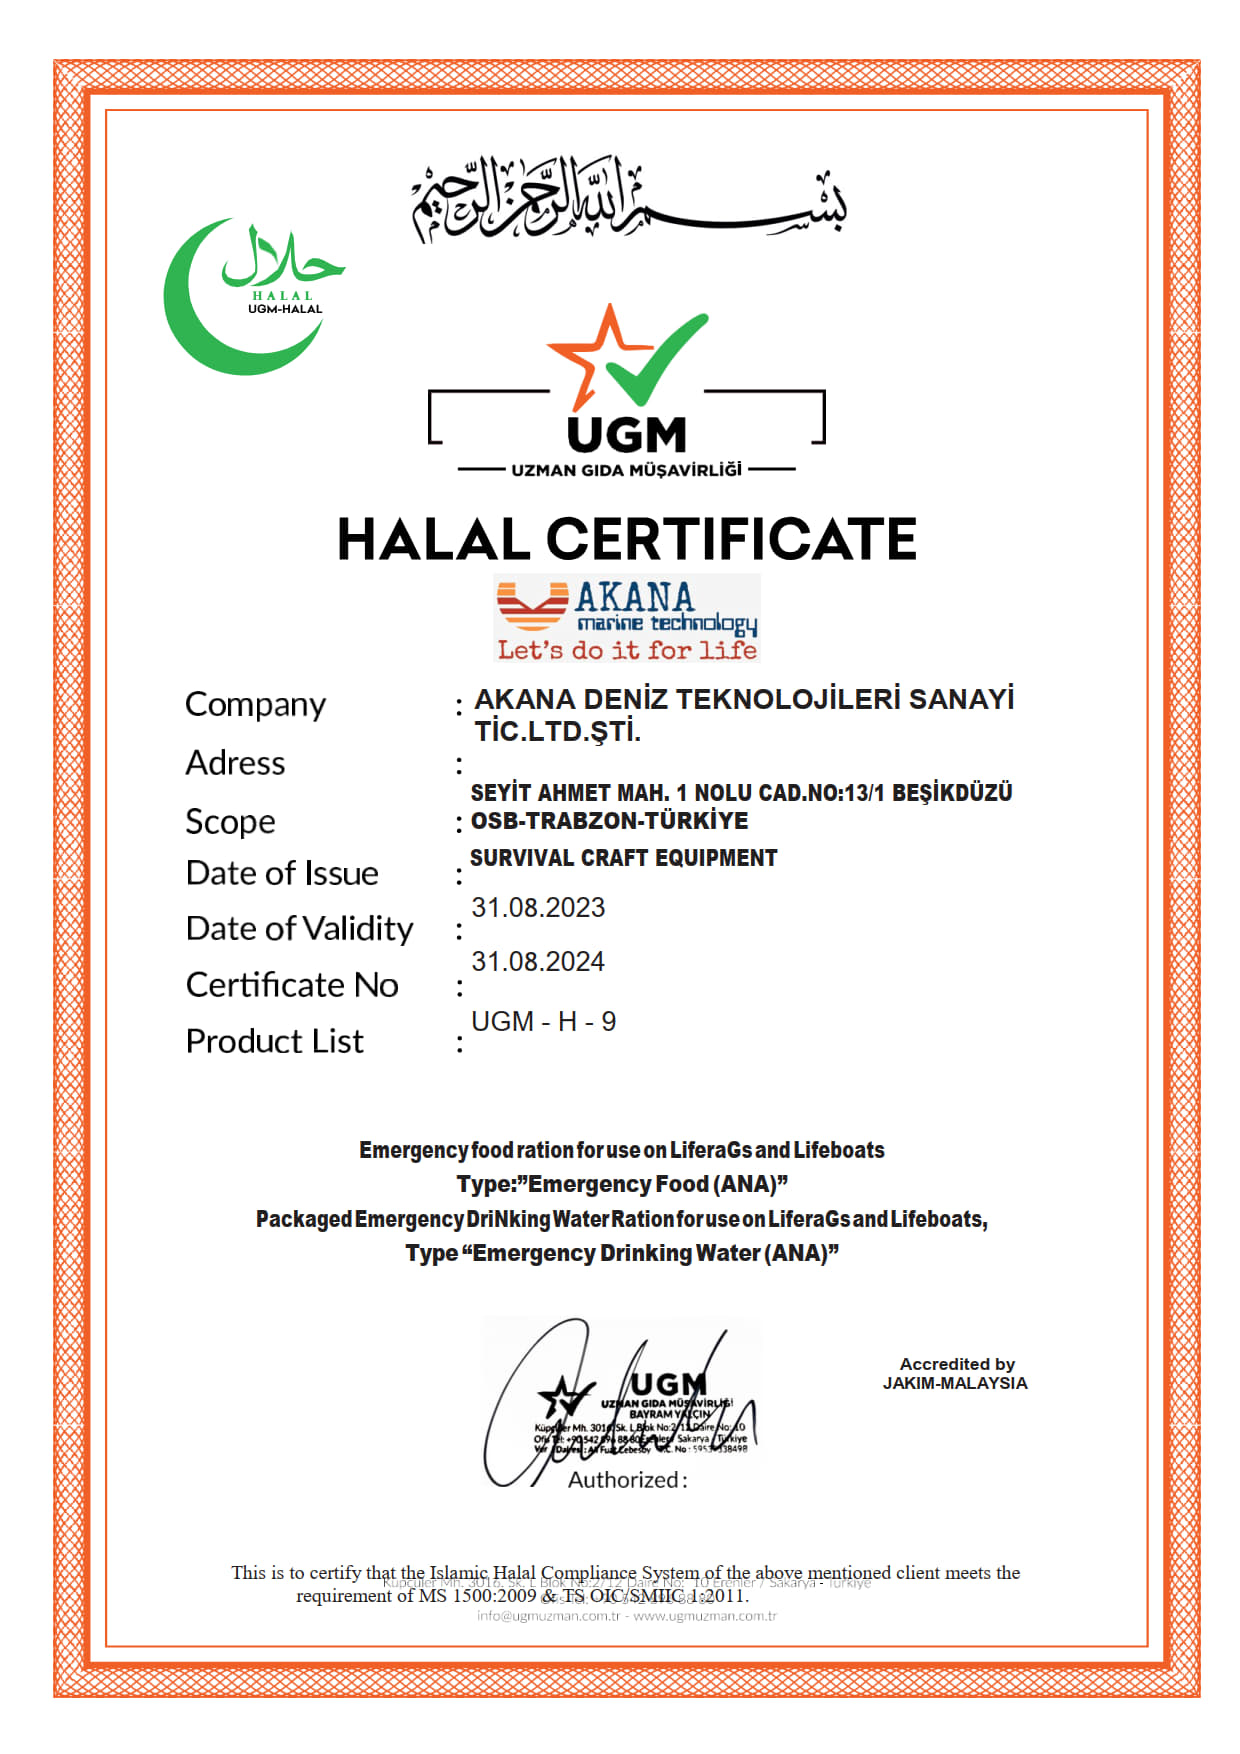 helal halal certificate.jpg